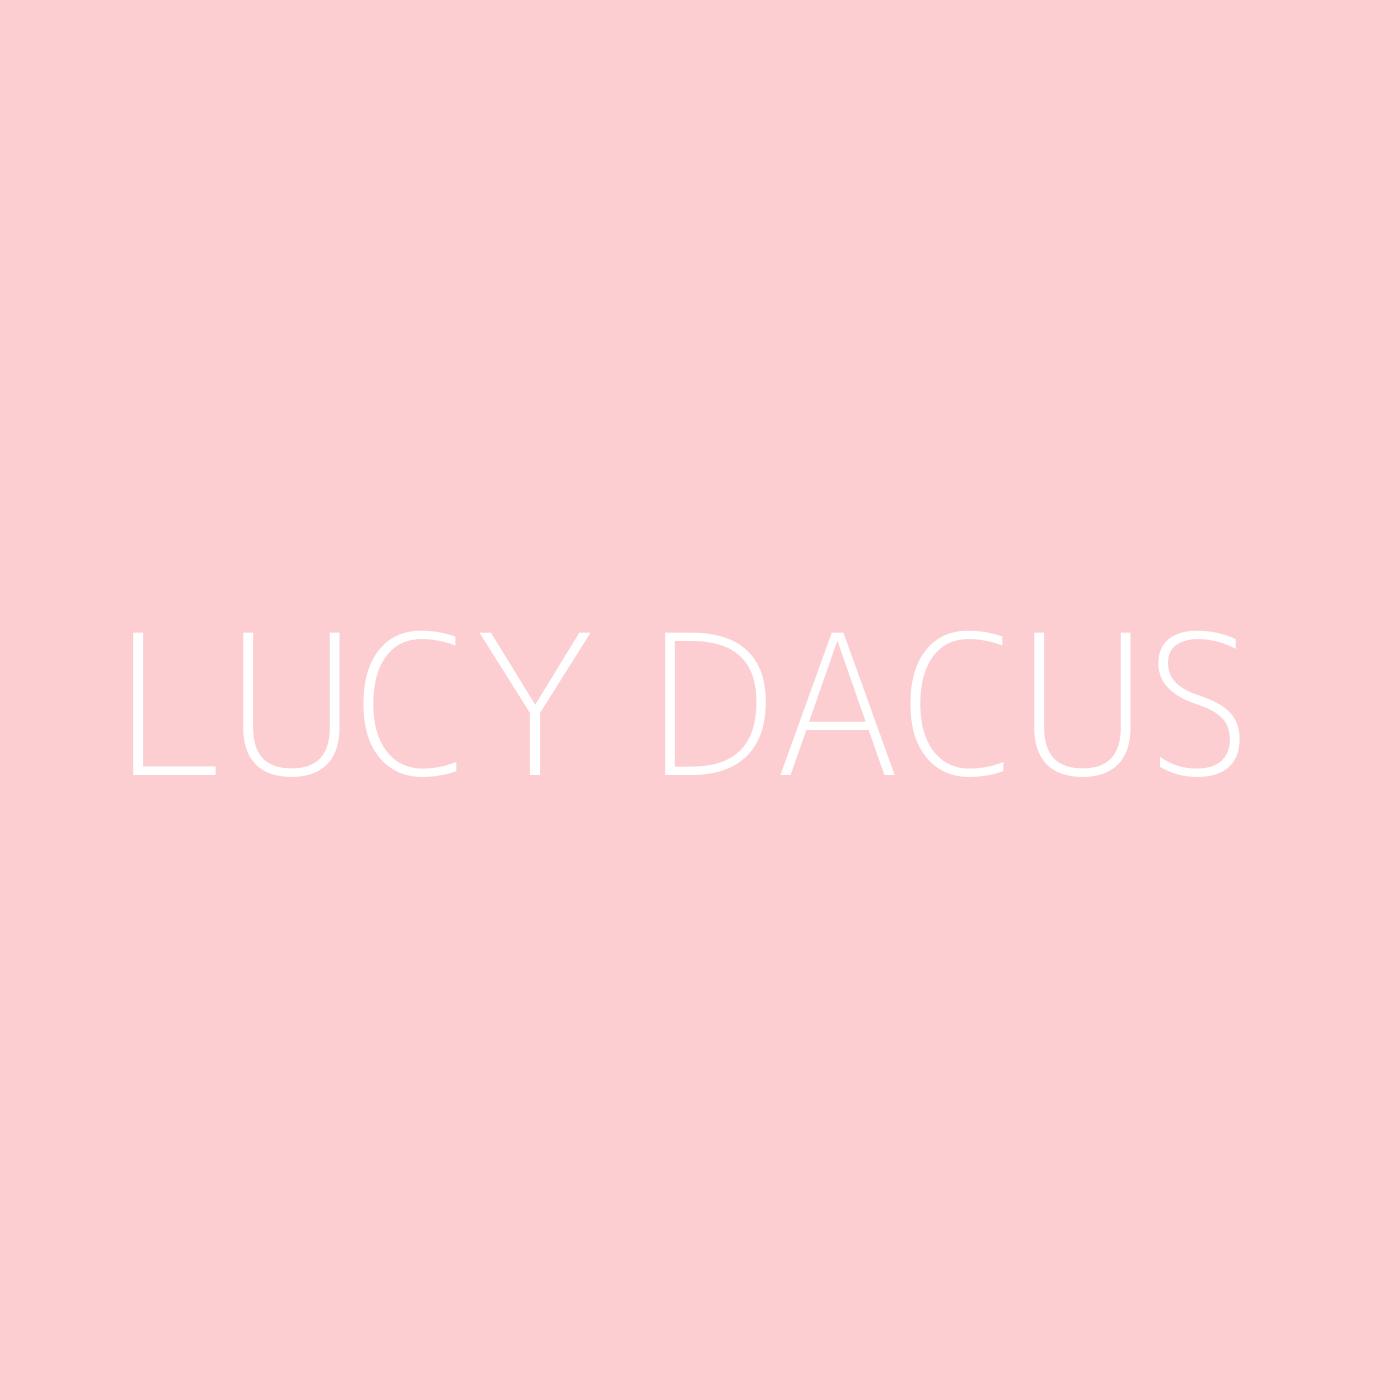 Lucy Dacus Playlist Artwork